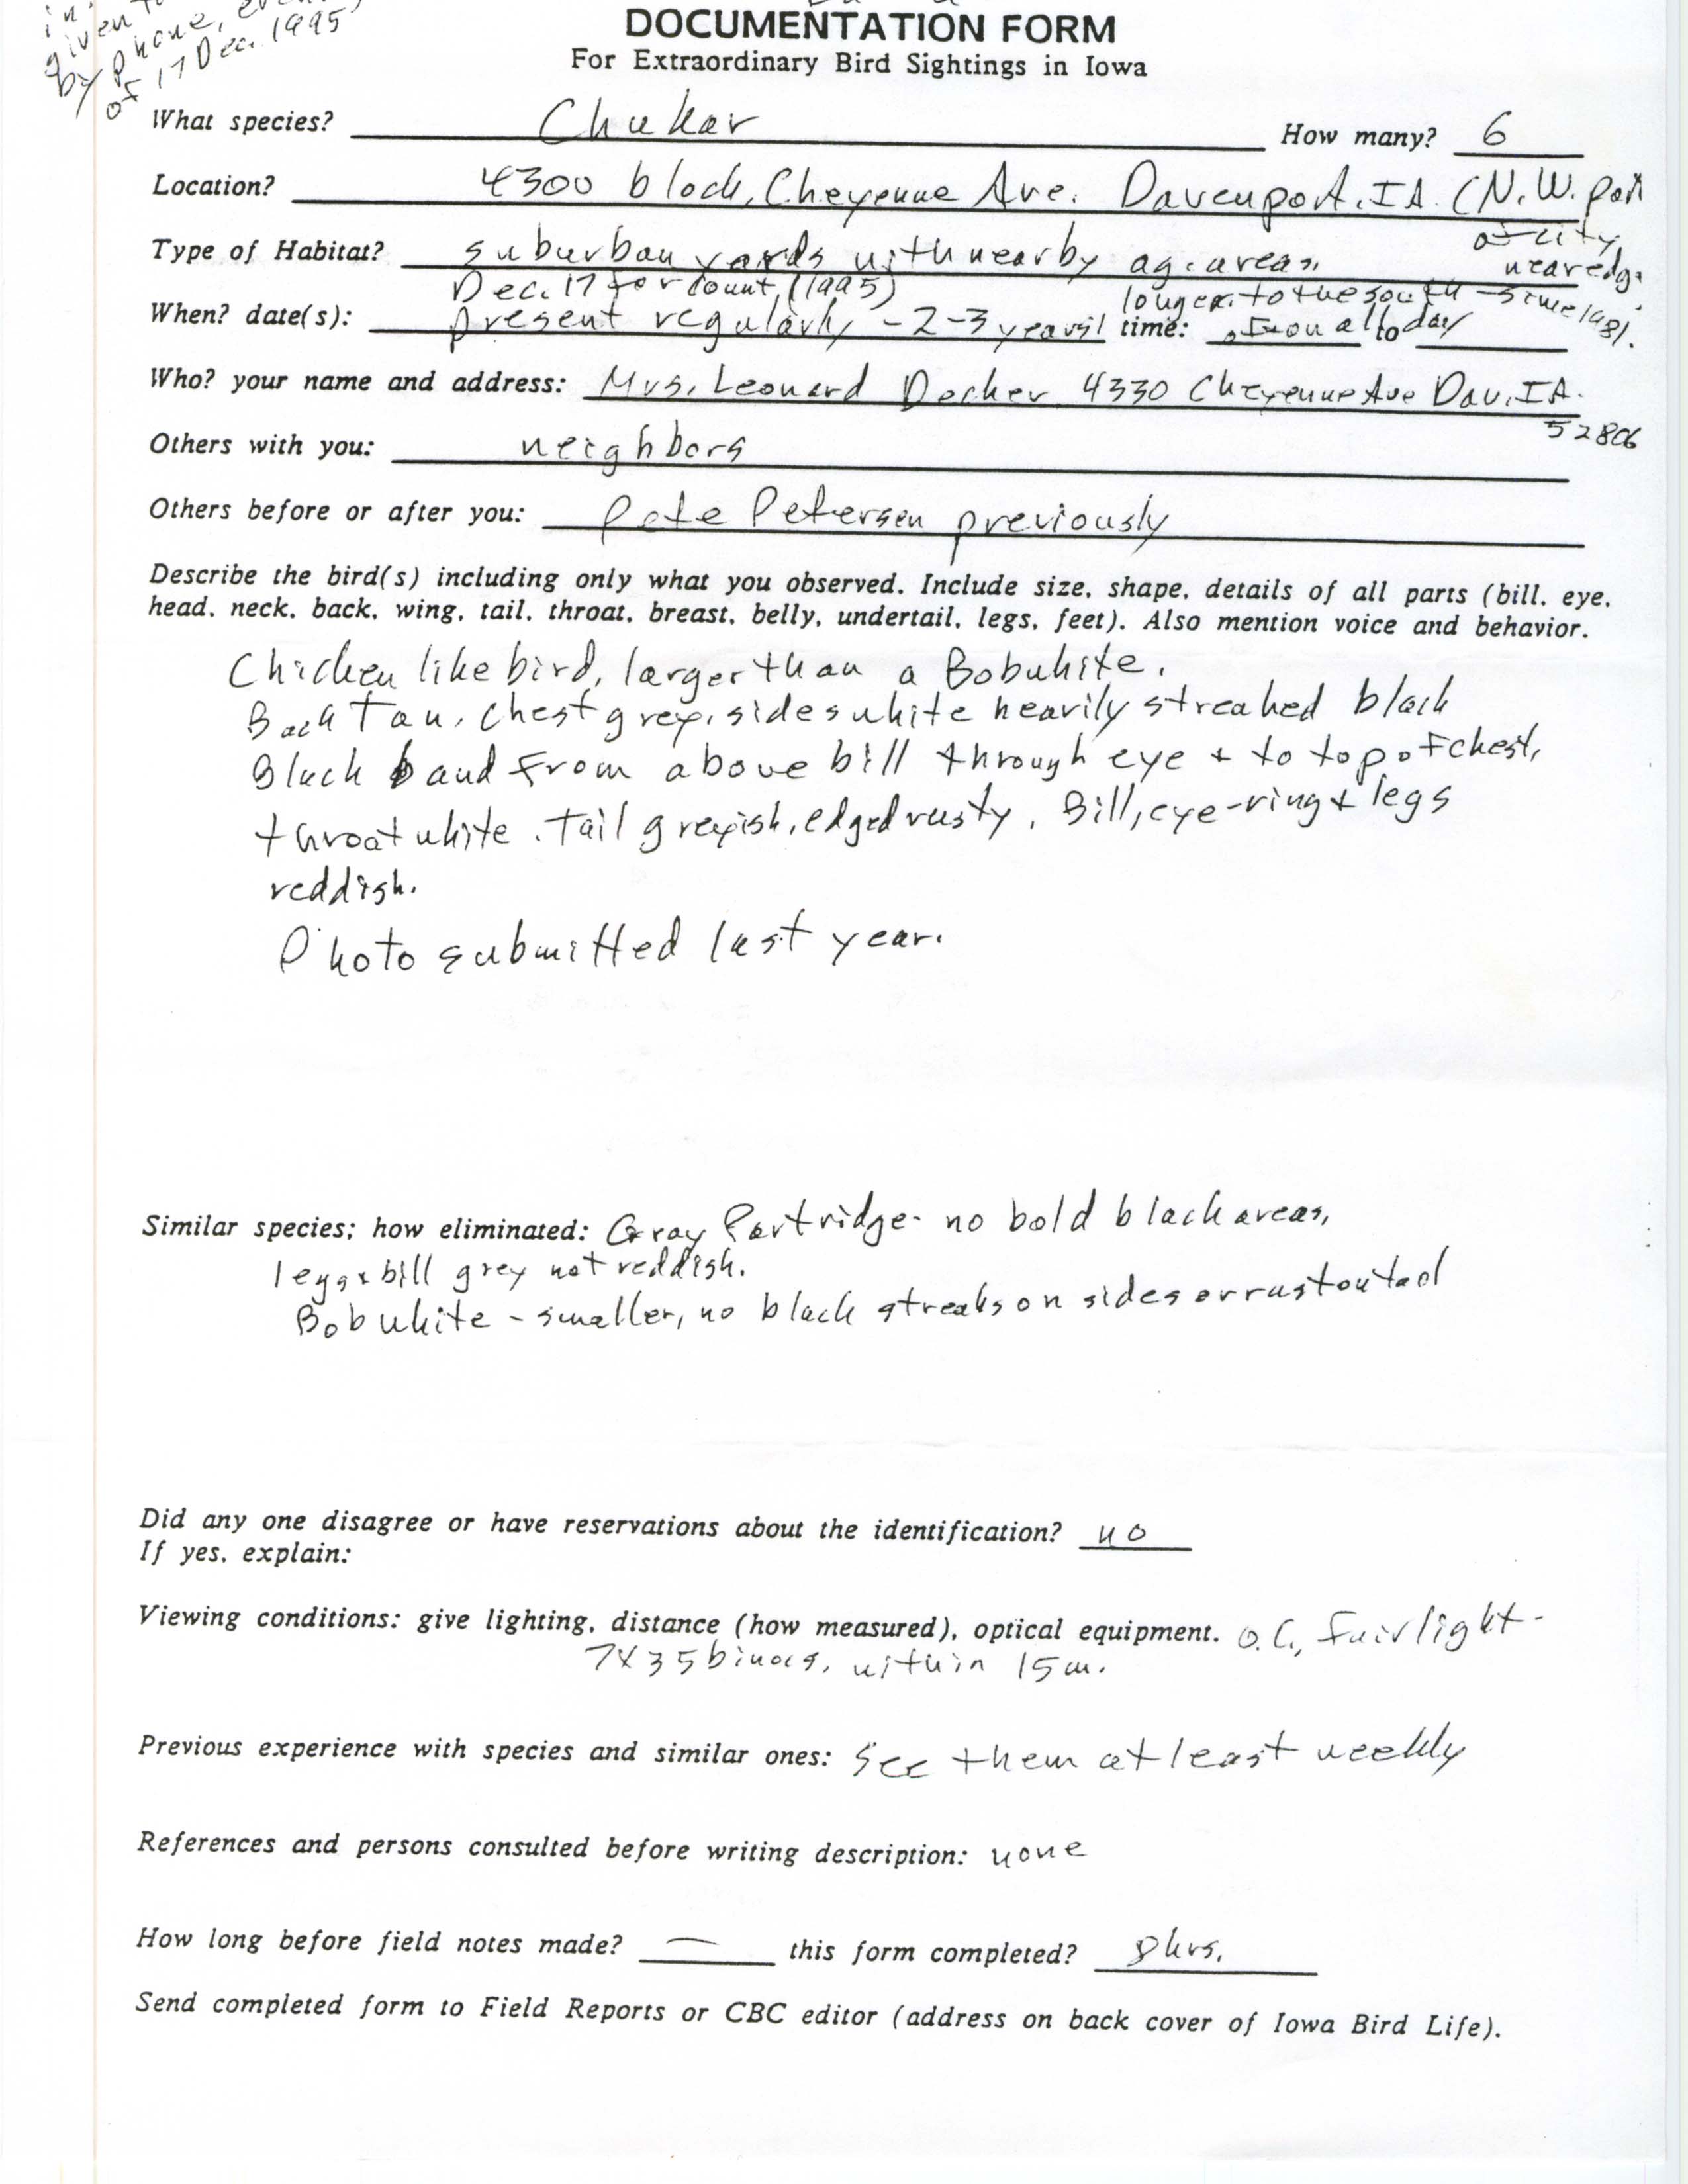 Rare bird documentation form for Chukar at Davenport in 1995